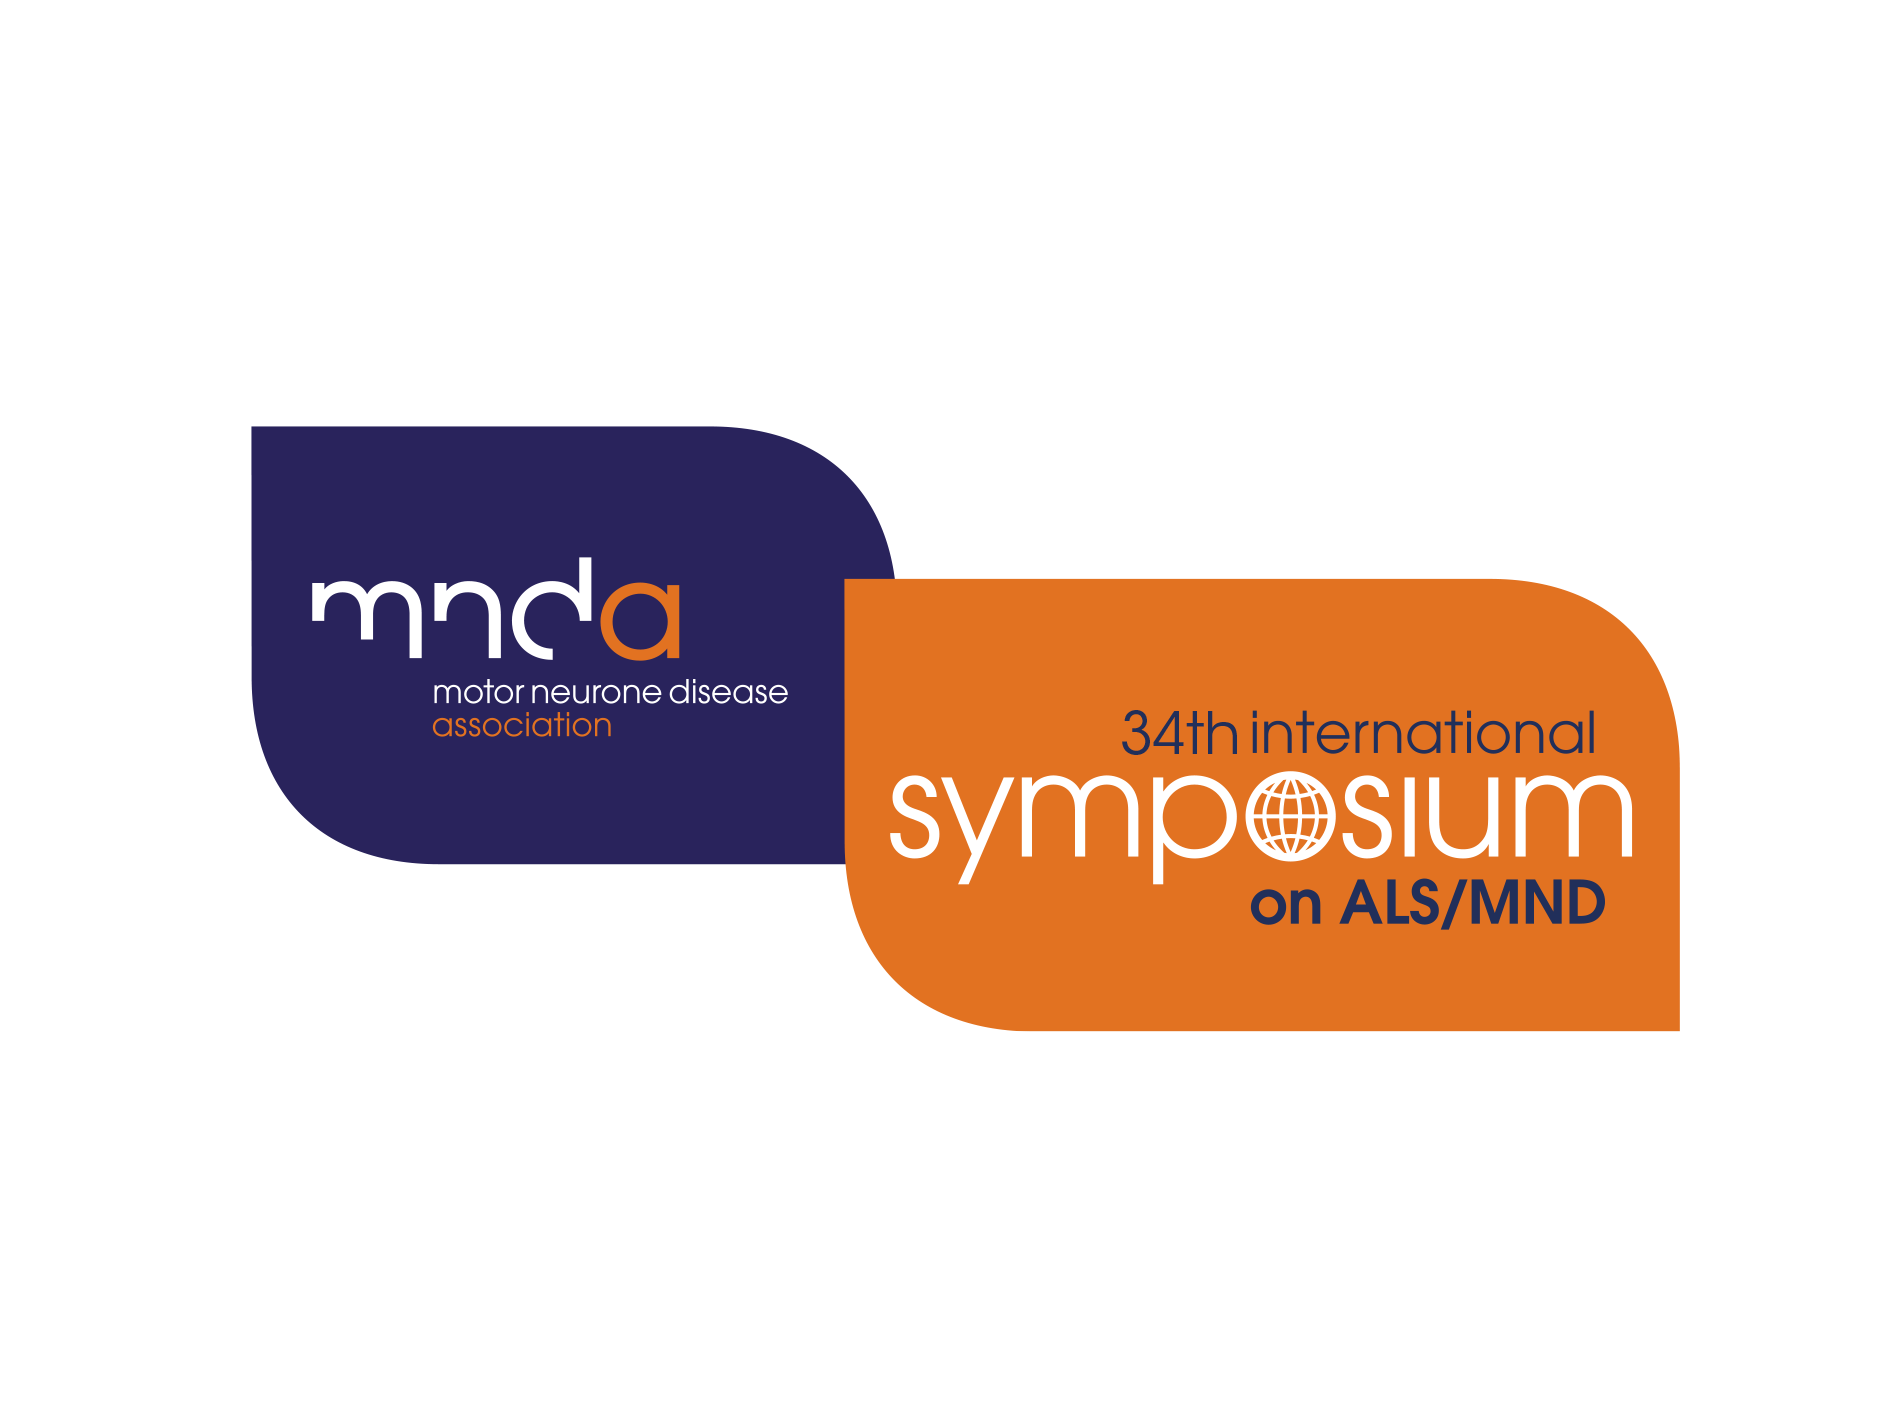 Countdown begins to 34th International Symposium on ALS/MND in Basel